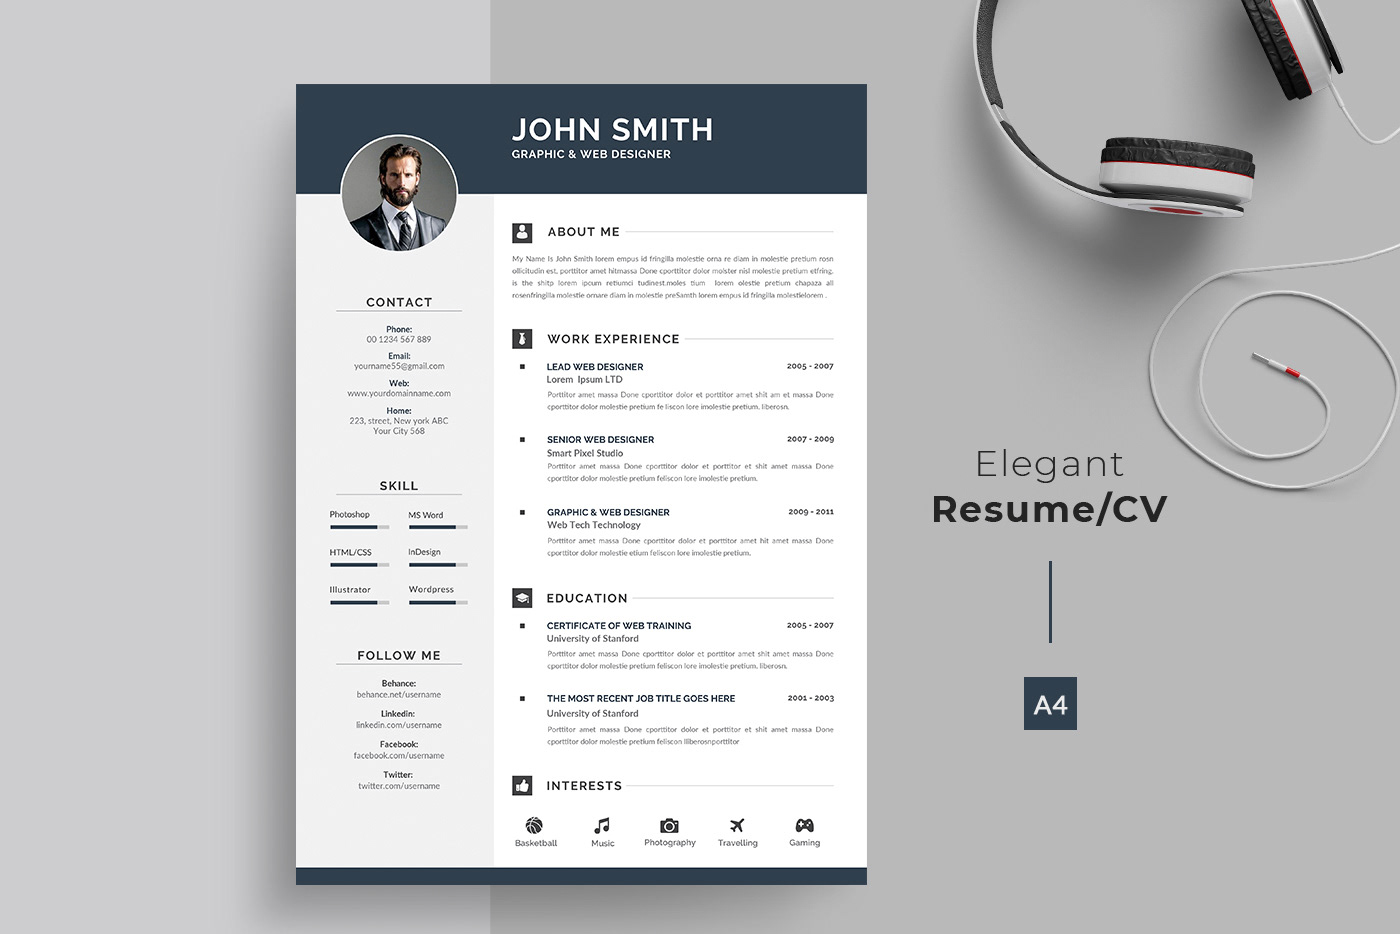 Resume CV job clean resume Modern Resume Resume Format a4 word resume template fresh